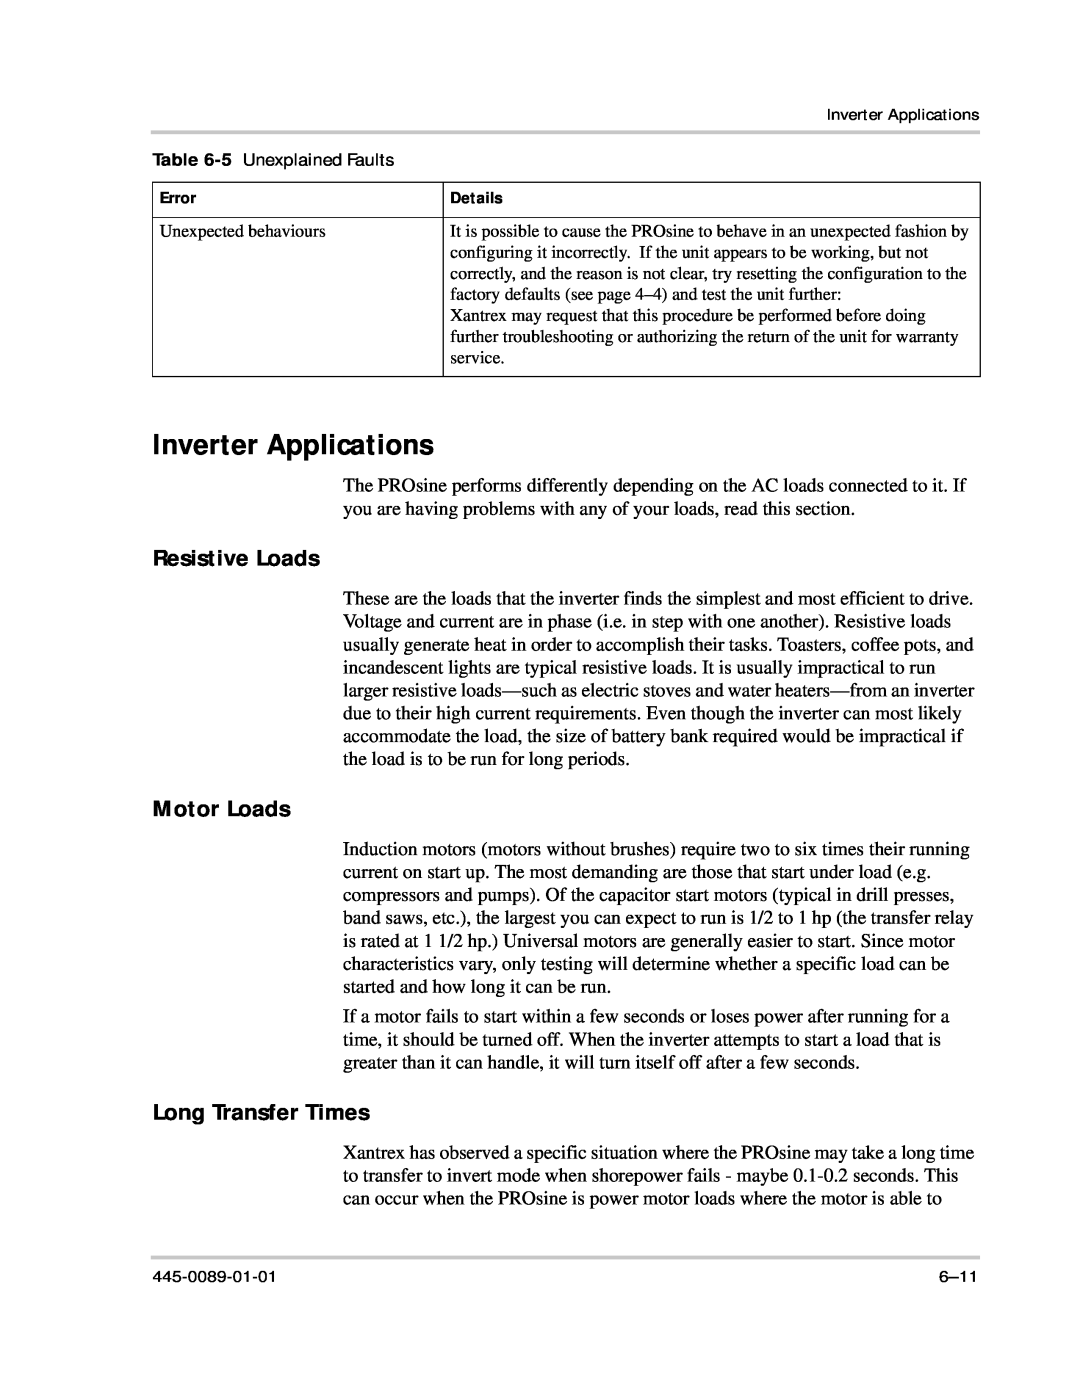 Xantrex Technology PROsine 2.0 user manual Inverter Applications, Resistive Loads, Motor Loads, Long Transfer Times 